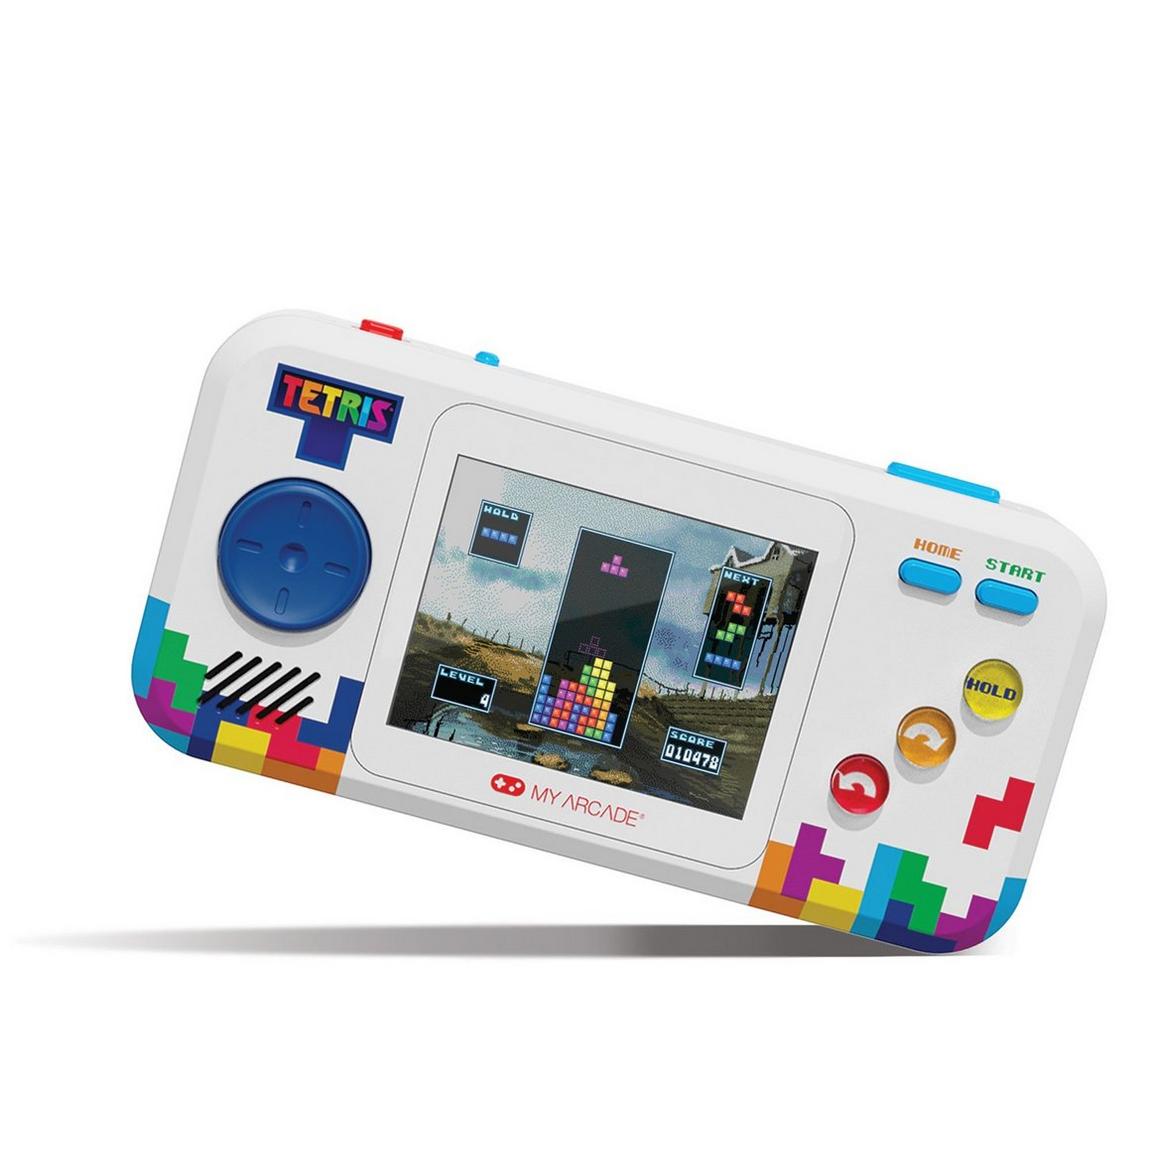 My Arcade TETRIS Pocket Player PRO Handheld Portable Video Game System